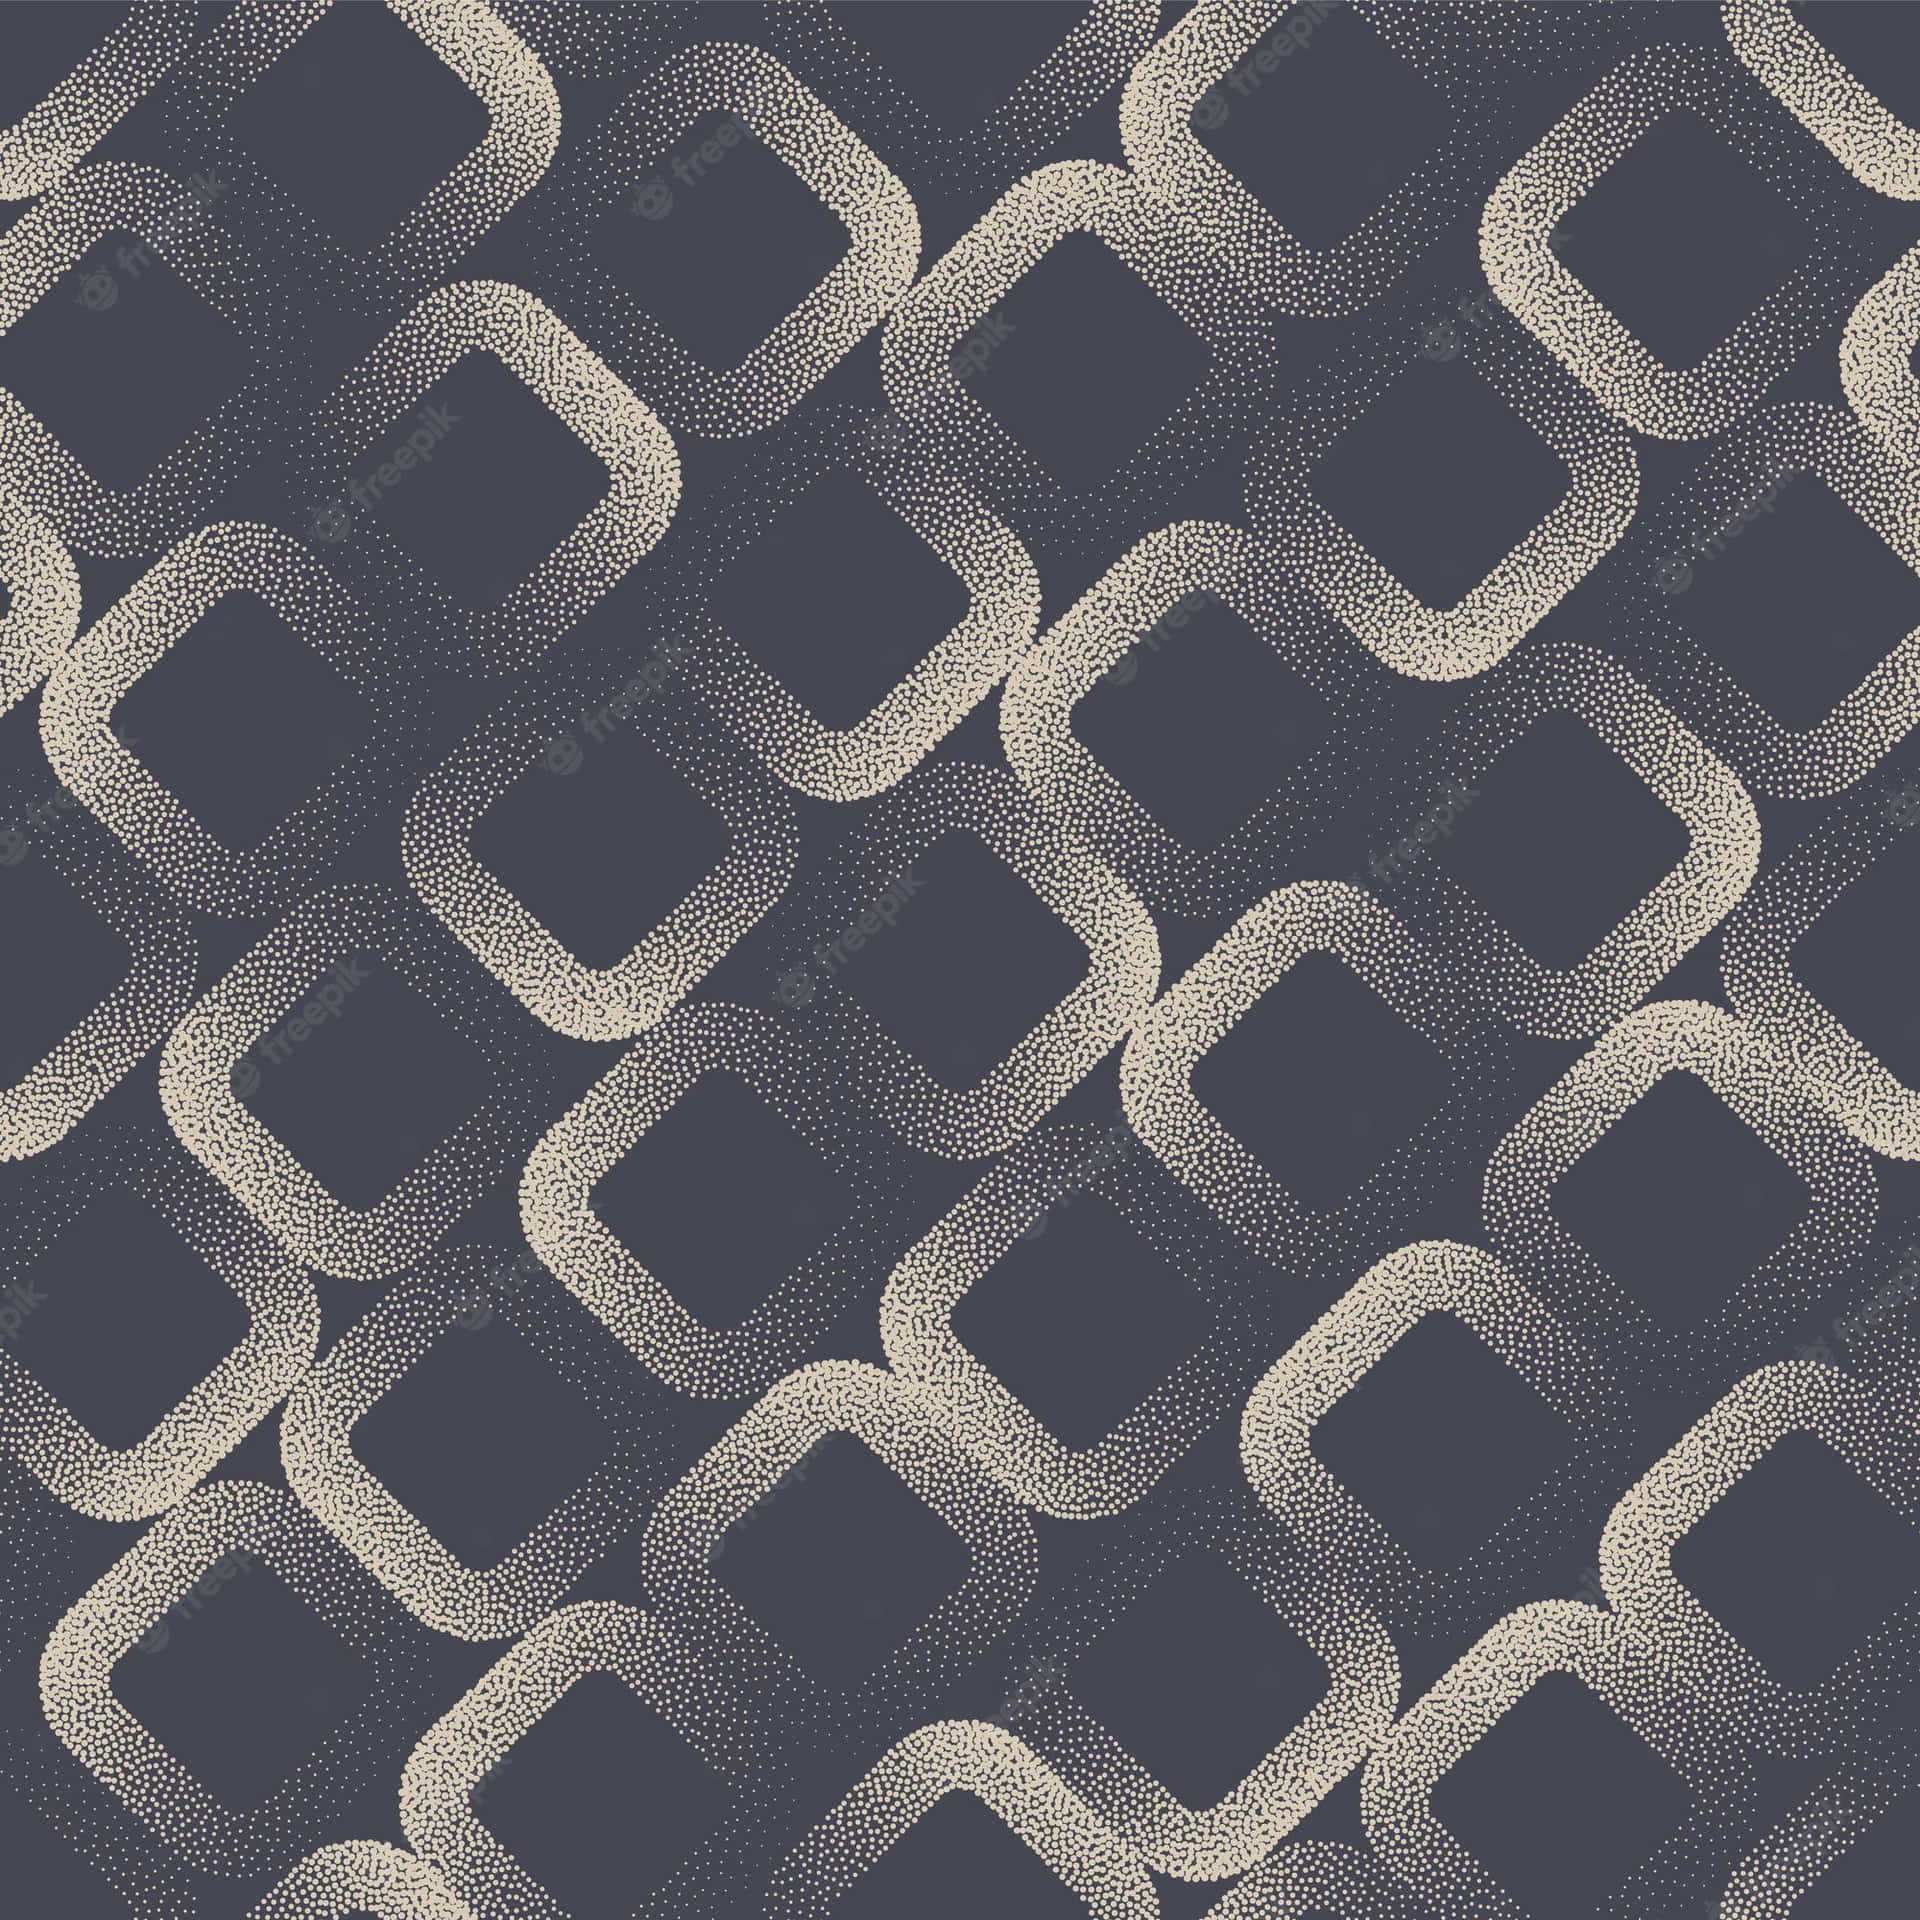 Repetitive Chain Link [wallpaper] Wallpaper